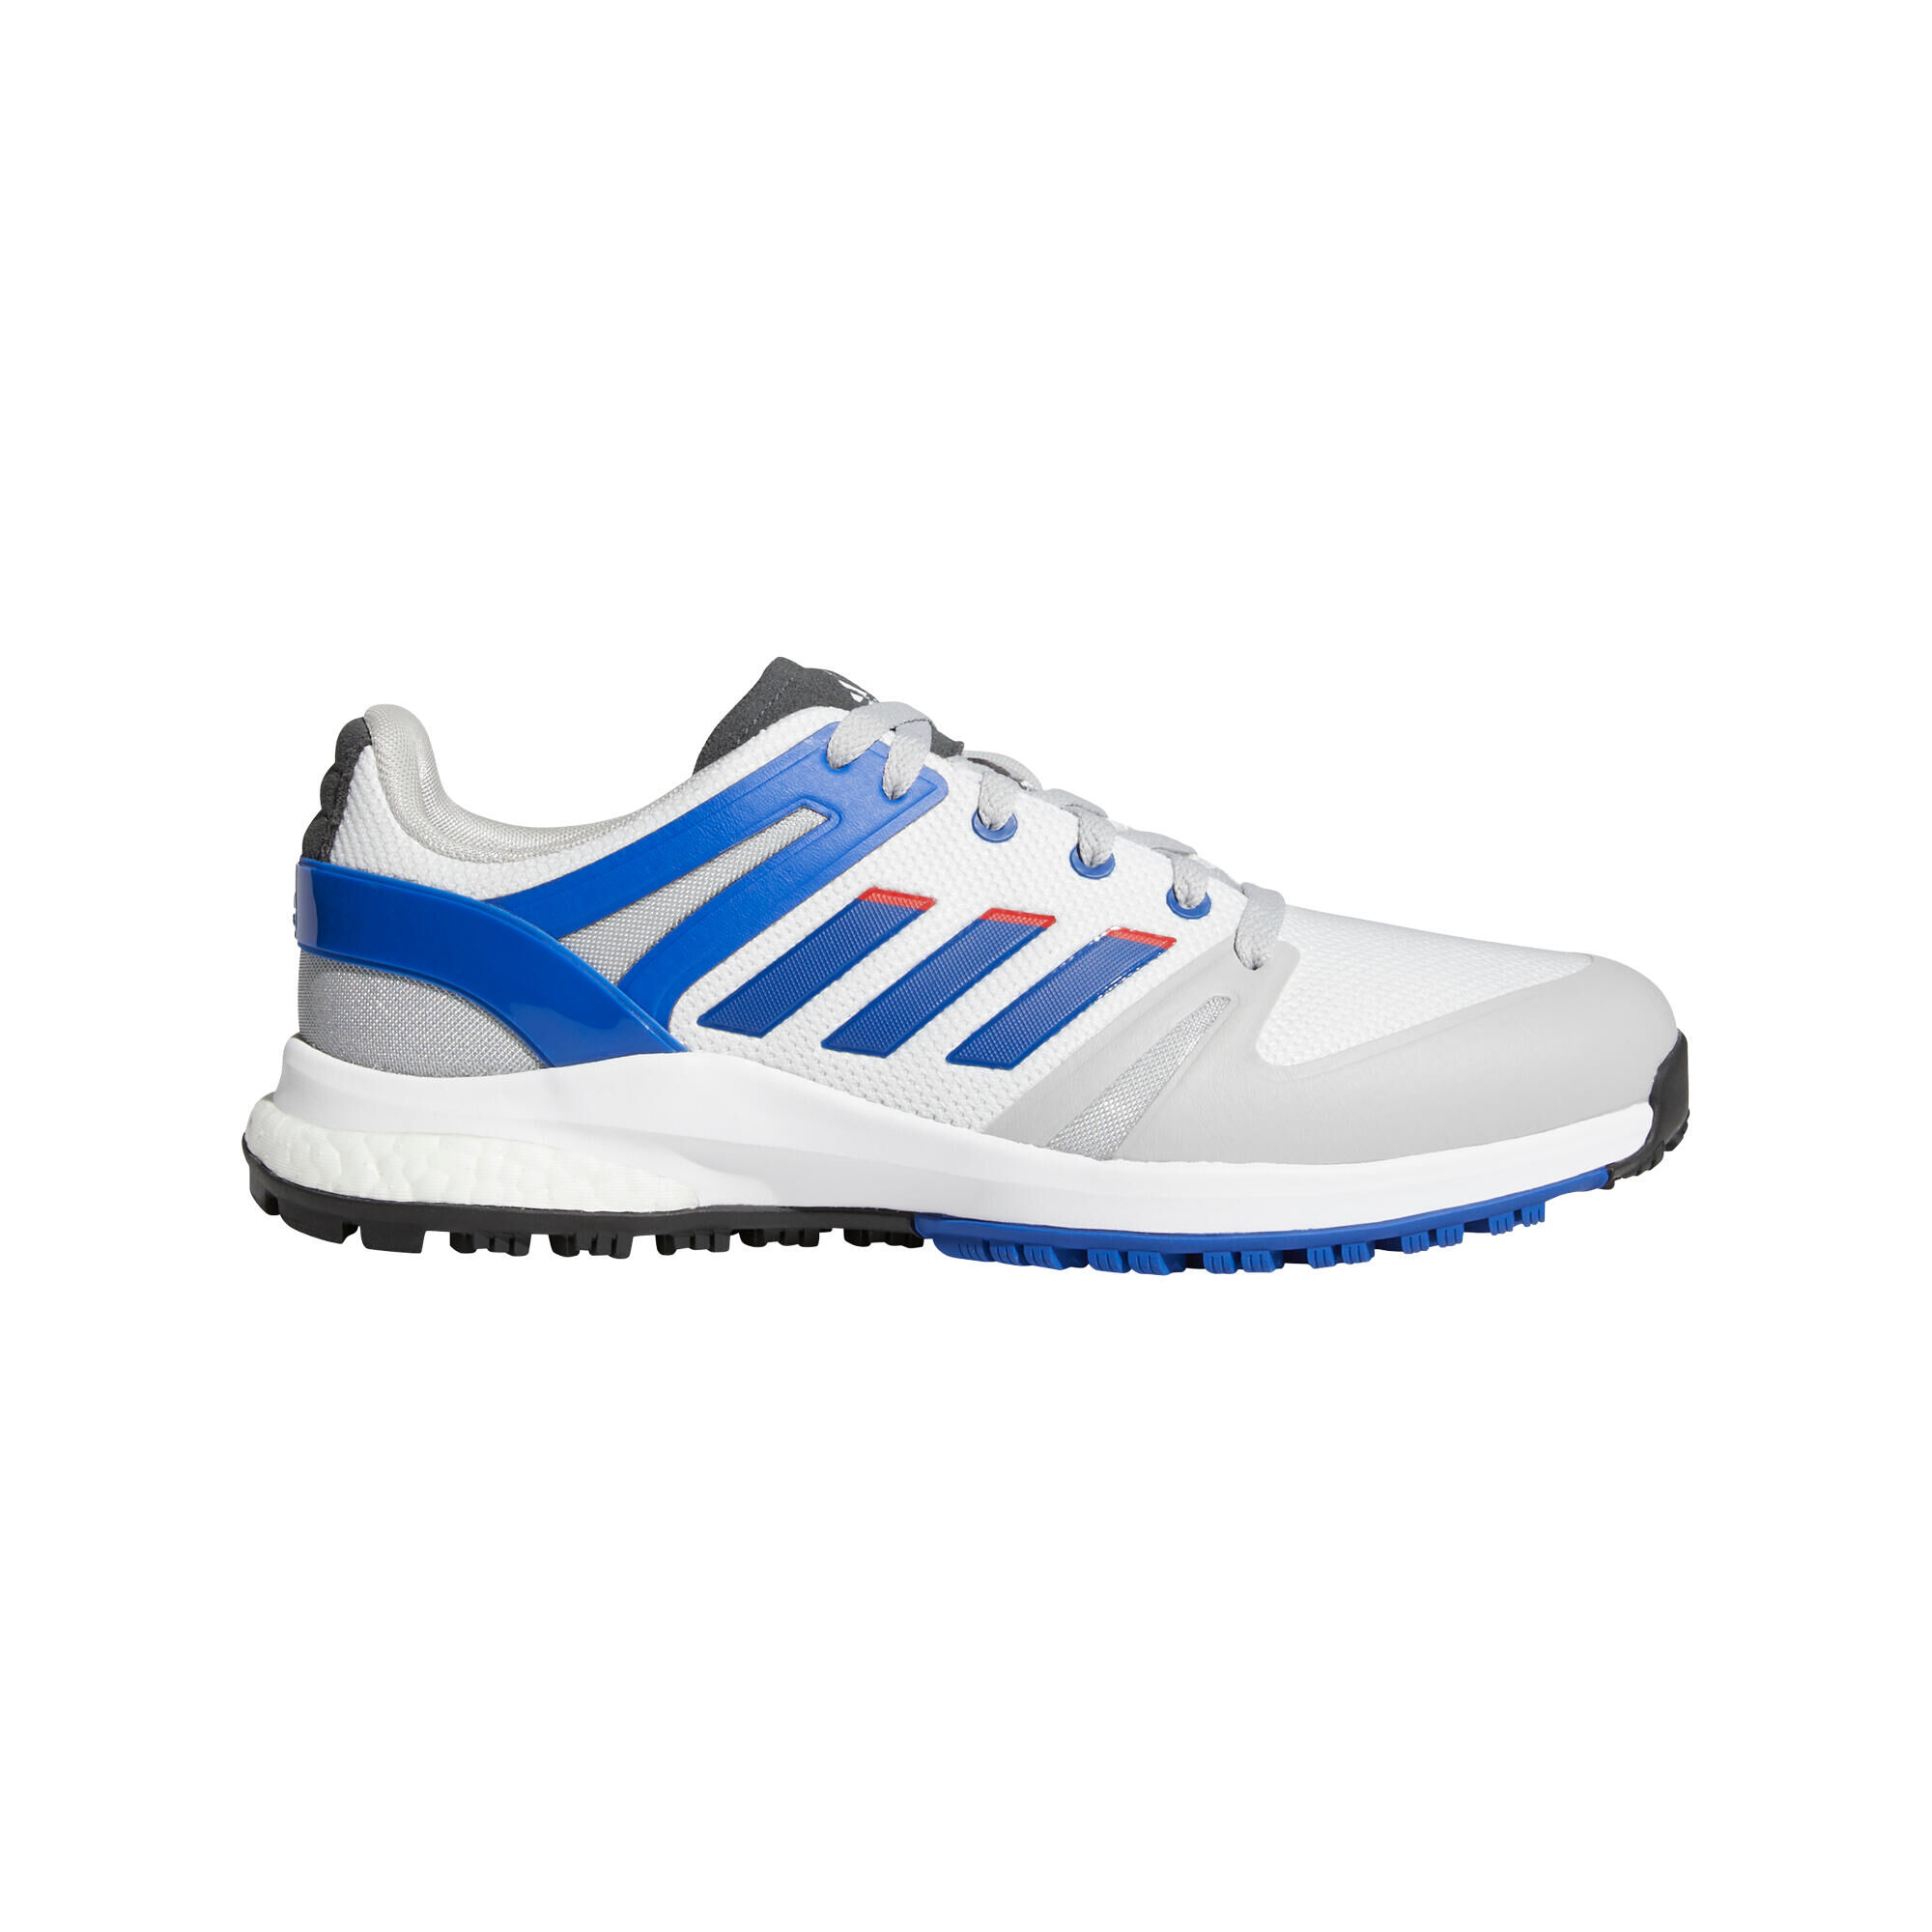 ADIDAS adidas EQT SL Golf Shoes - White/Blue/Grey2